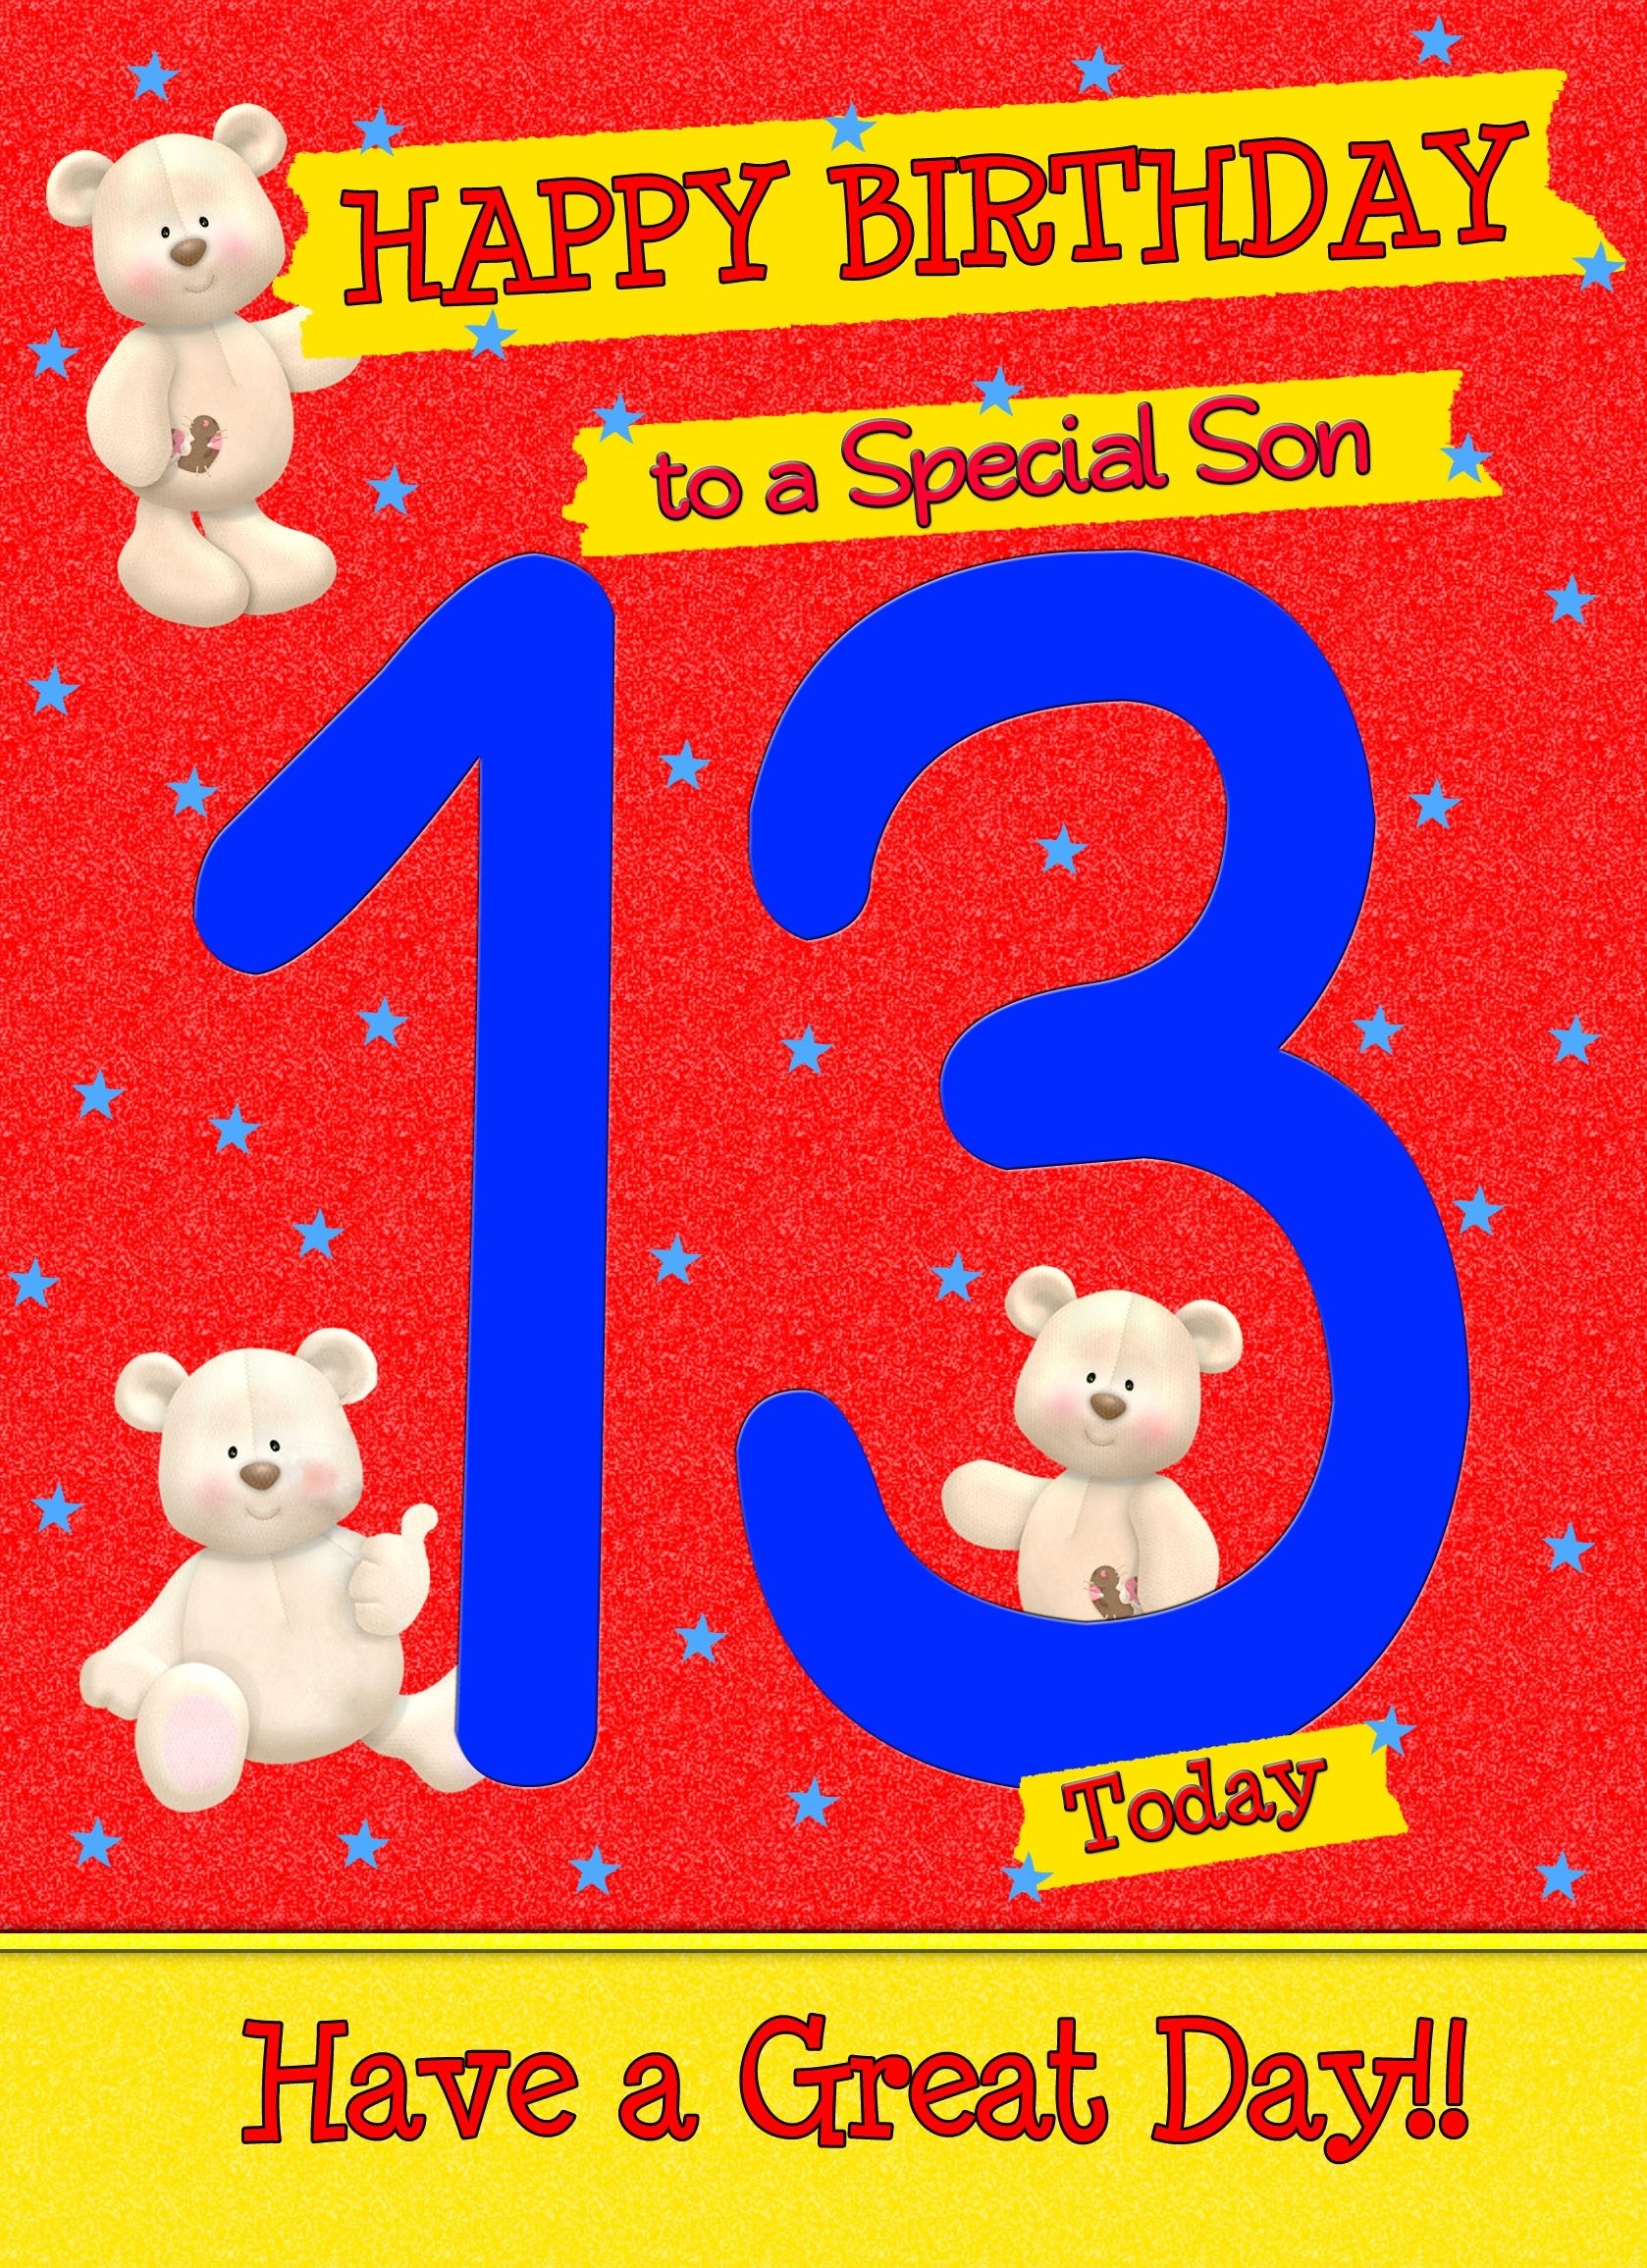 13 Today Birthday Card (Son)